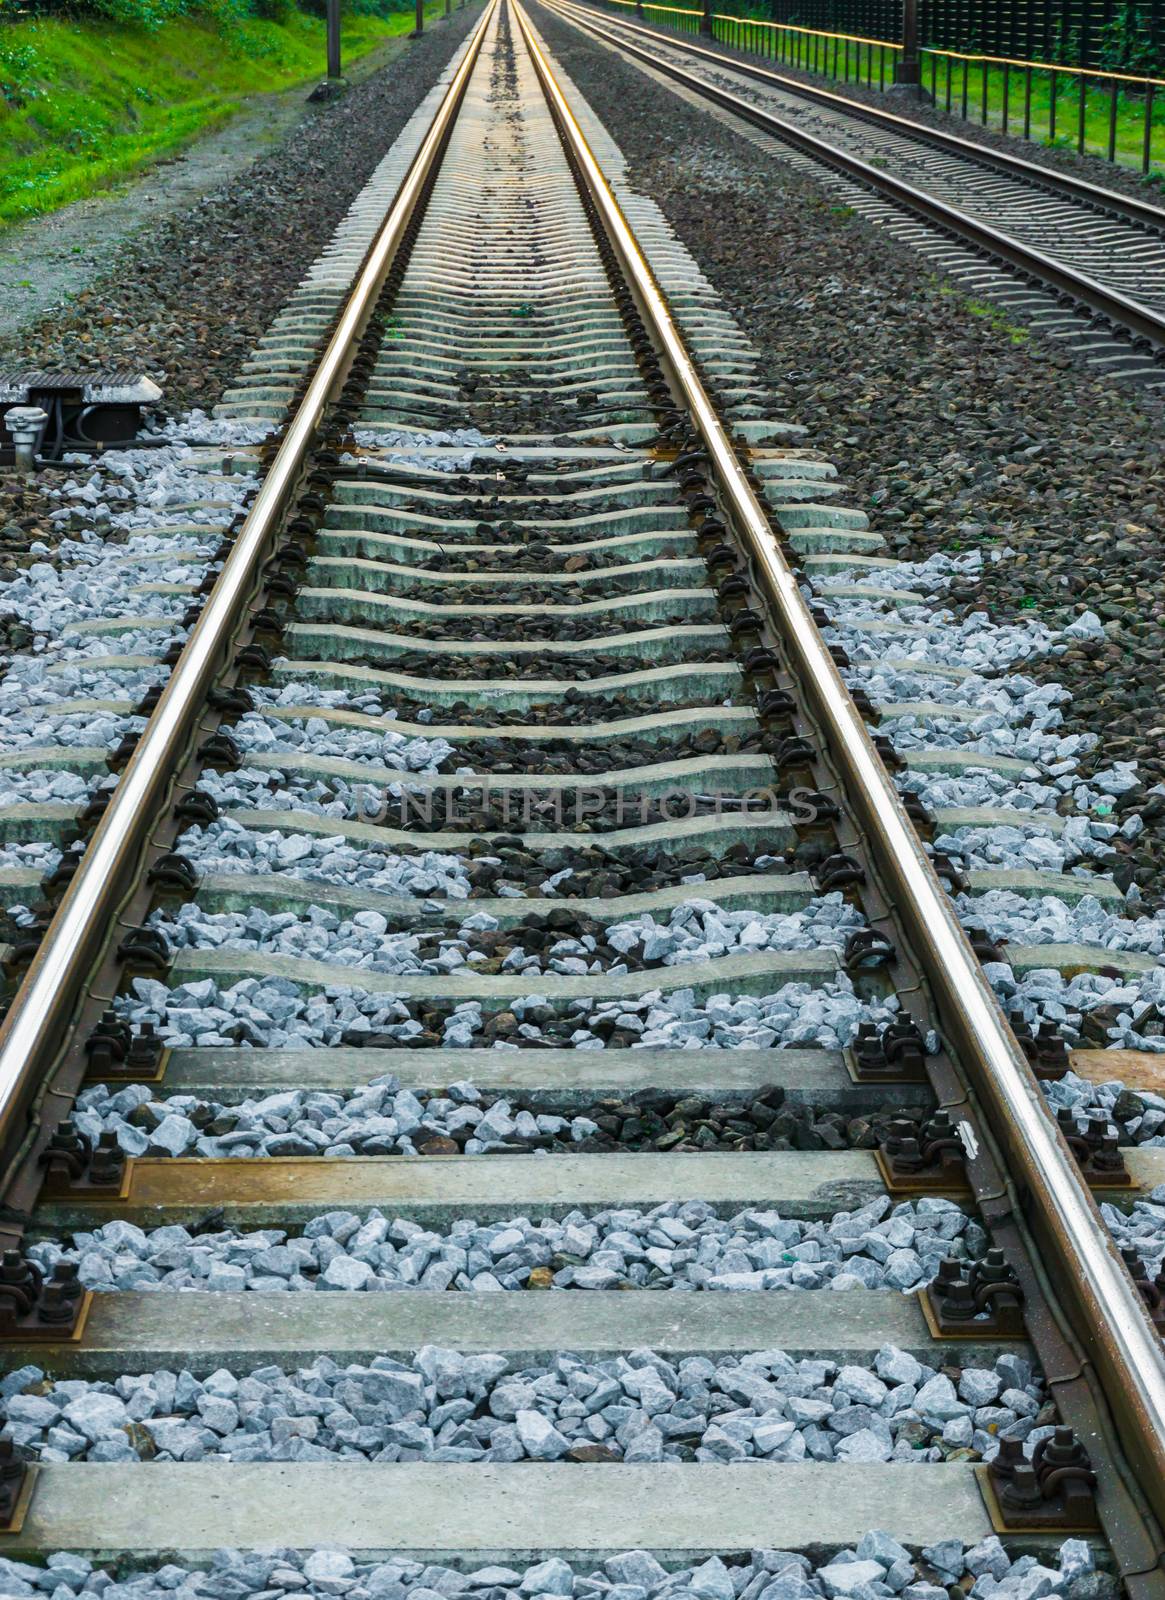 Long train railroad track in closeup transportation and travel background by charlottebleijenberg